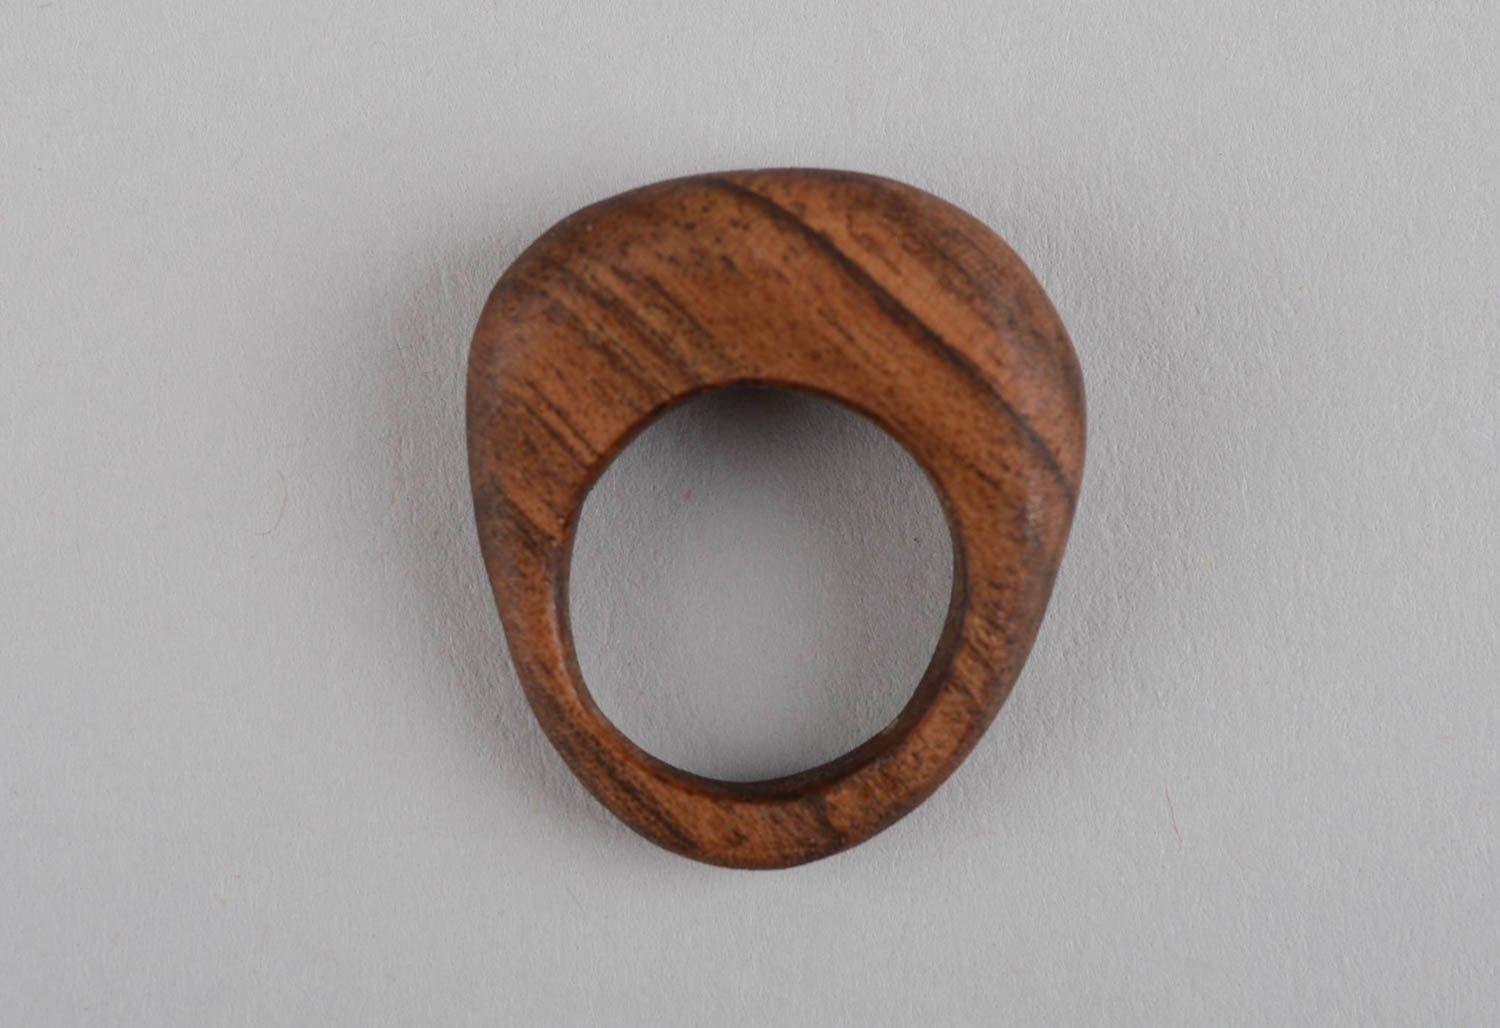 Stylish handmade wooden ring wooden jewelry costume jewelry designs gift ideas photo 7